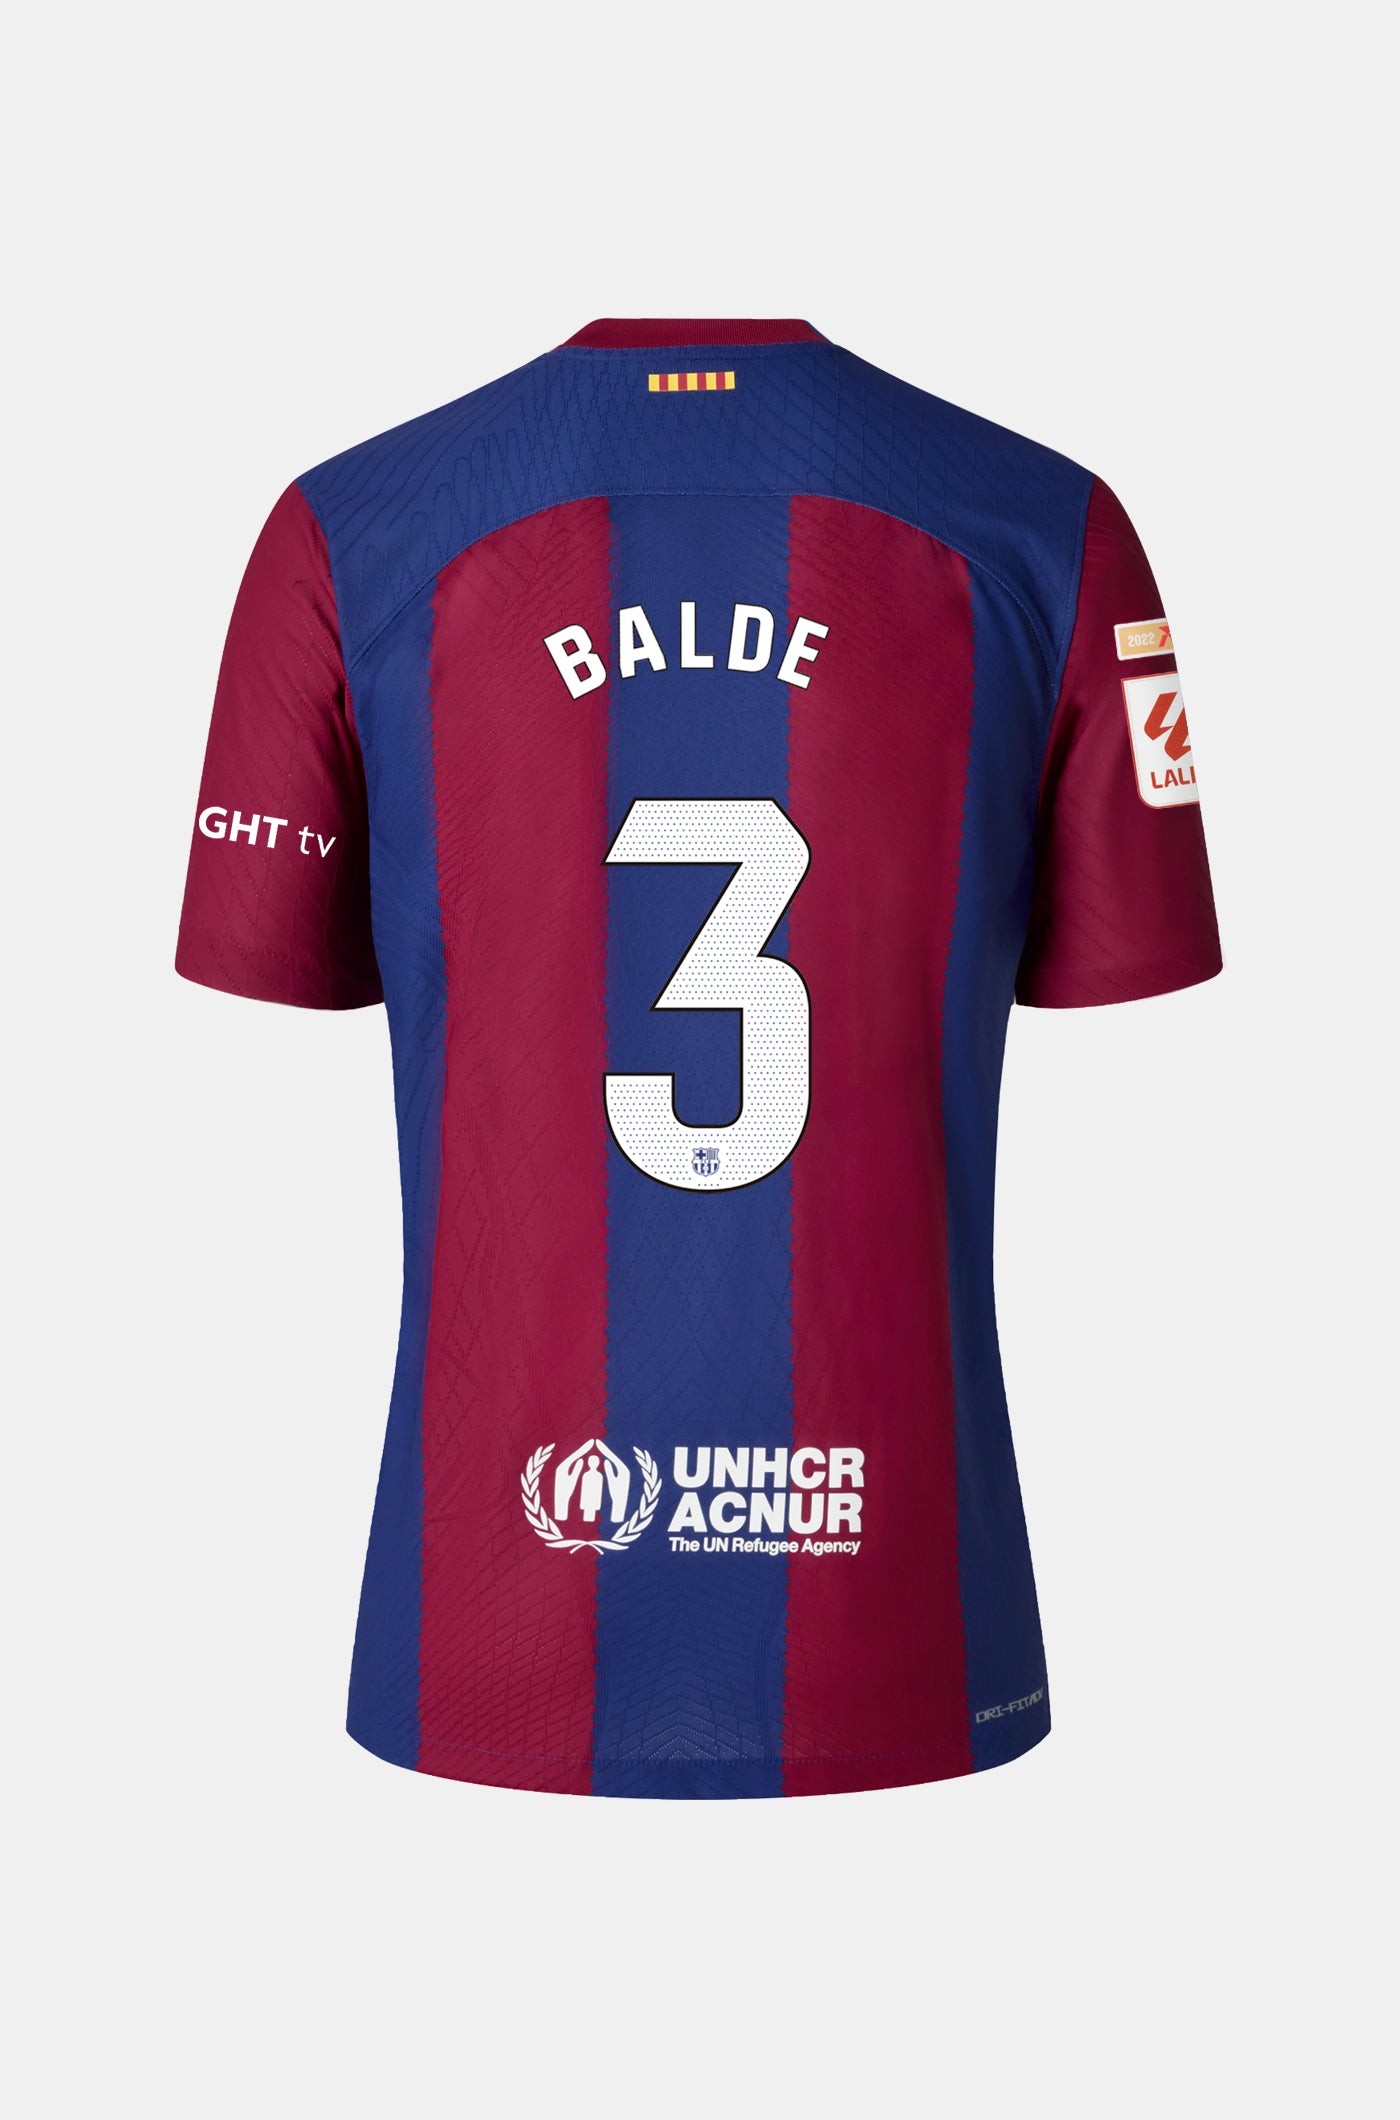 LFP FC Barcelona home shirt 23/24 Player's Edition - BALDE